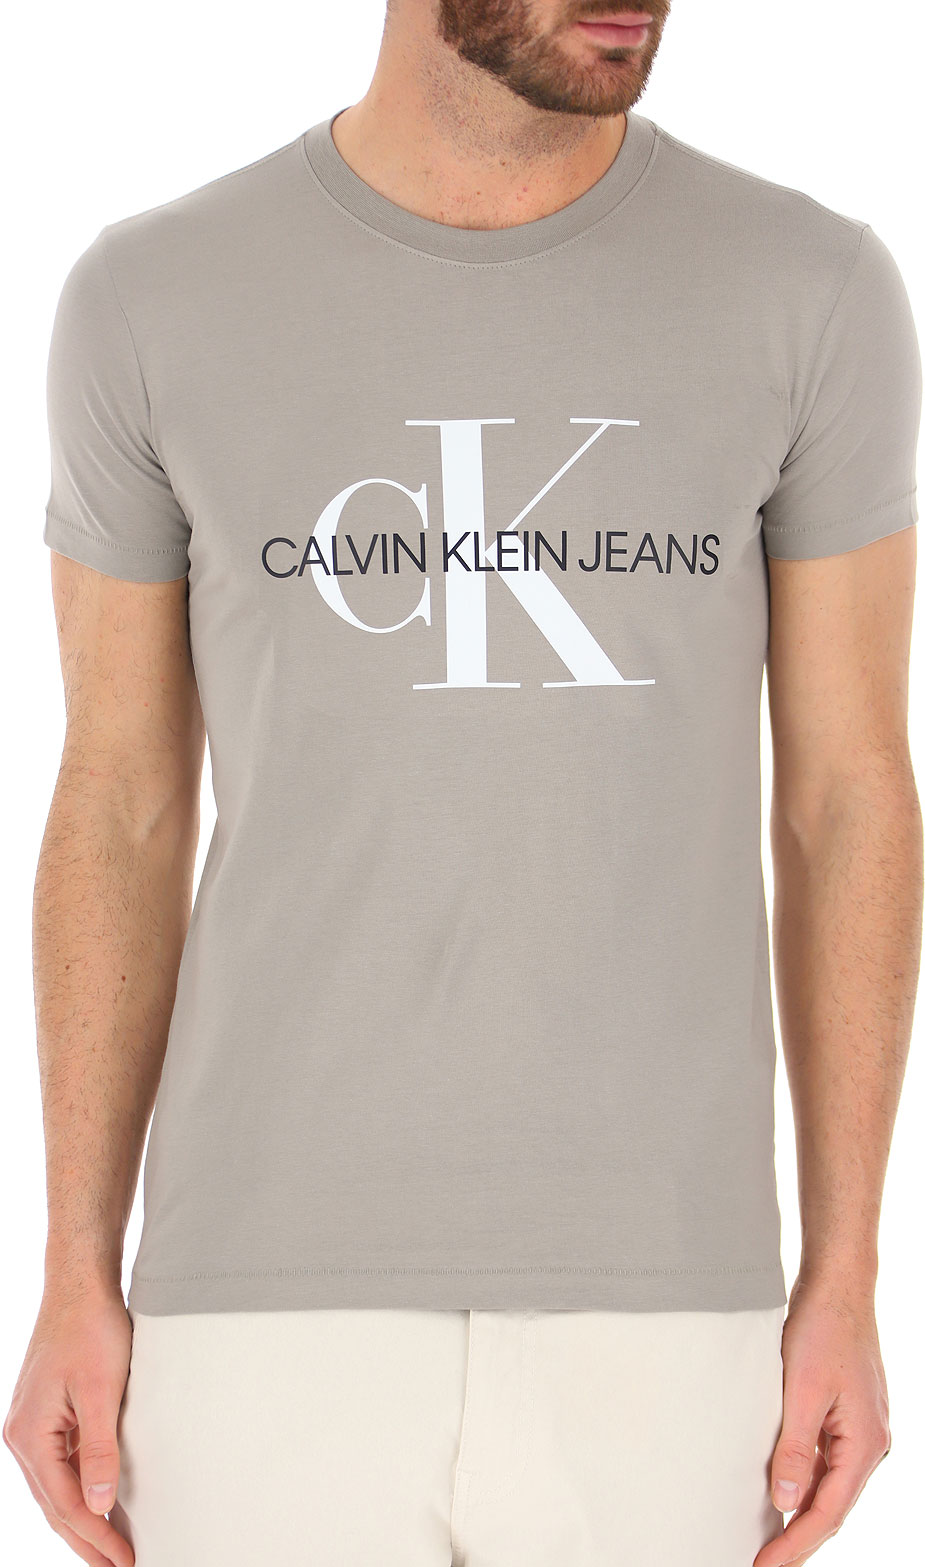 Mens Clothing Calvin Klein, Style code: j30j317065-pbu-